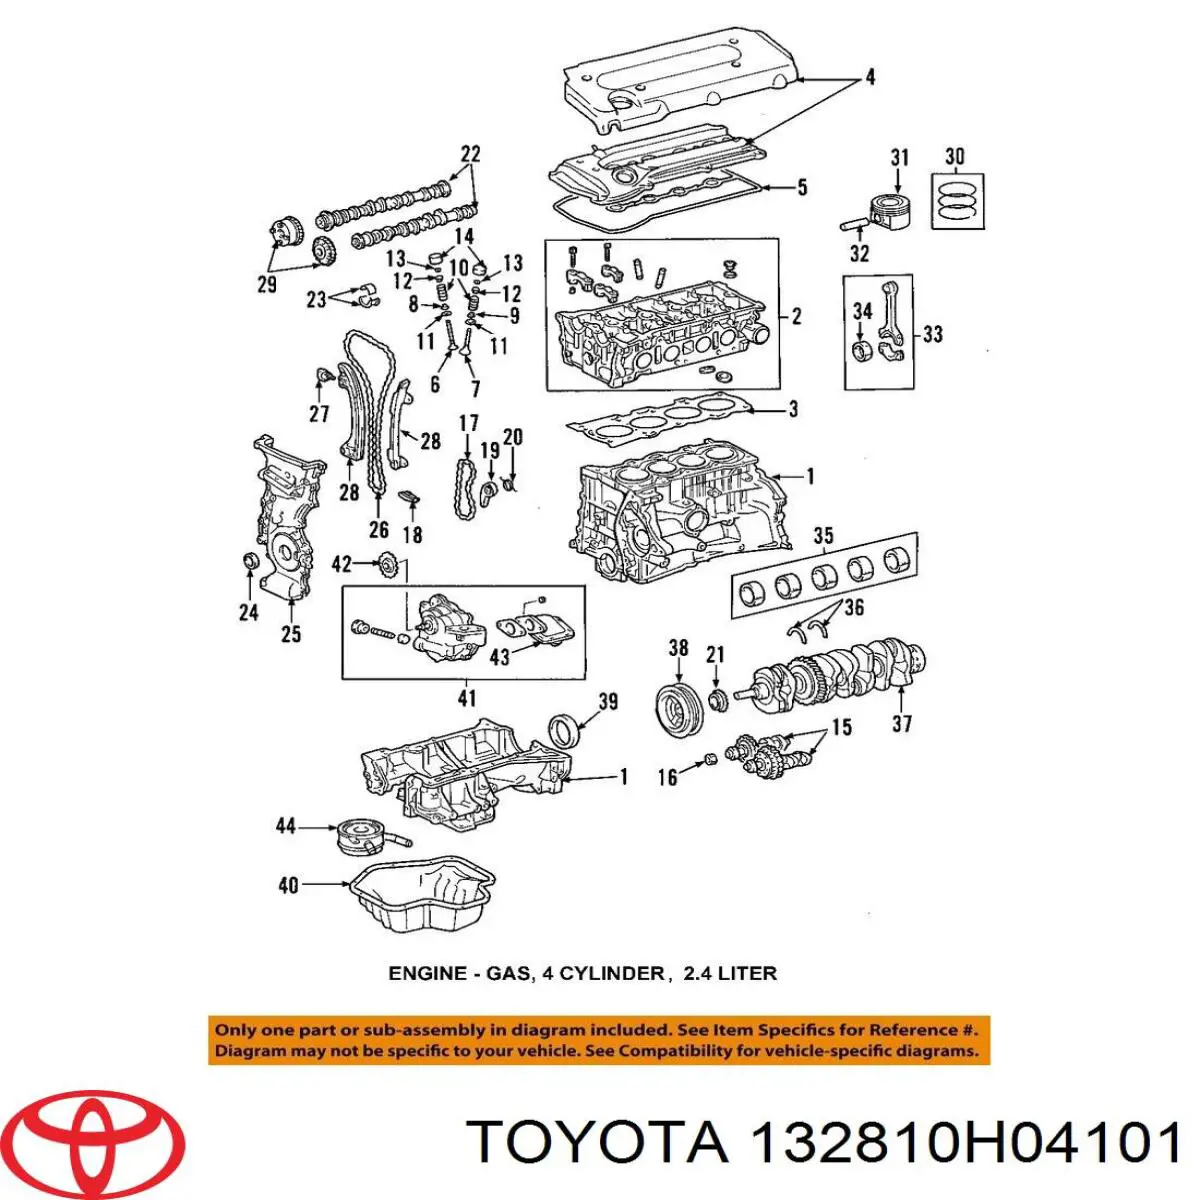 Вкладыши коленвала компрессора шатунные, комплект, стандарт (STD) на Toyota Camry V40